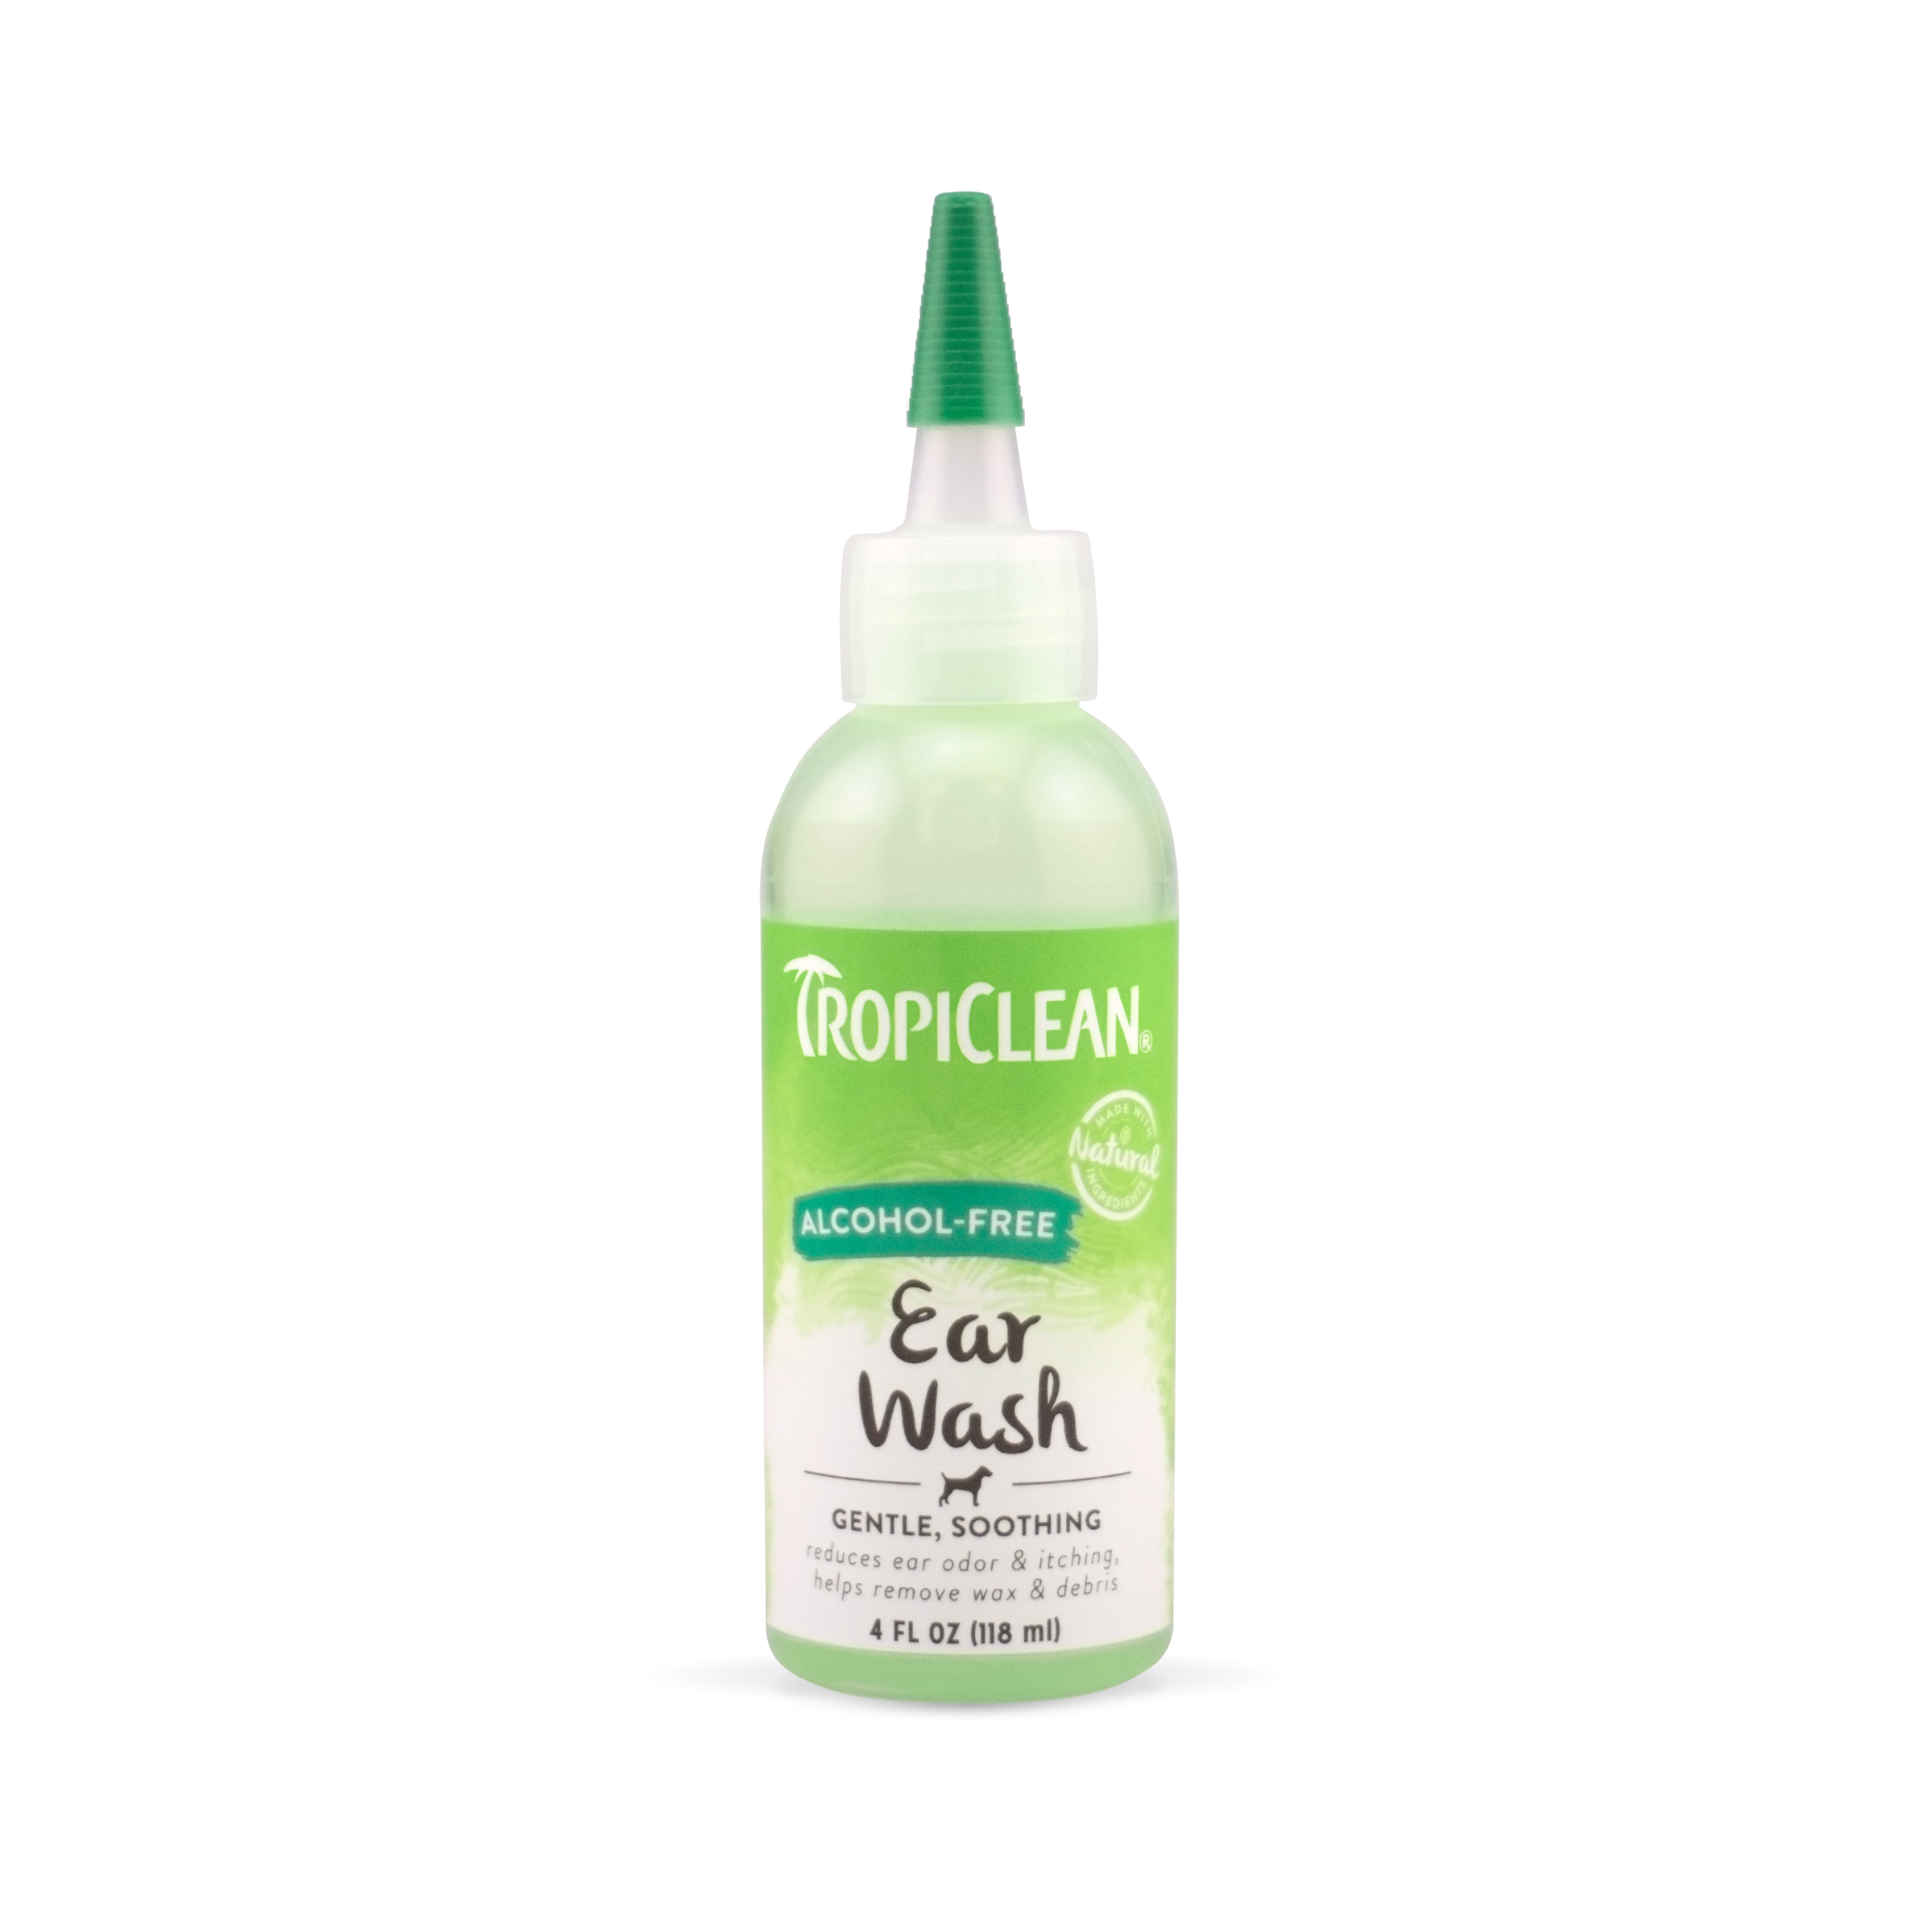 Tropiclean Alcohol-Free Ear Wash